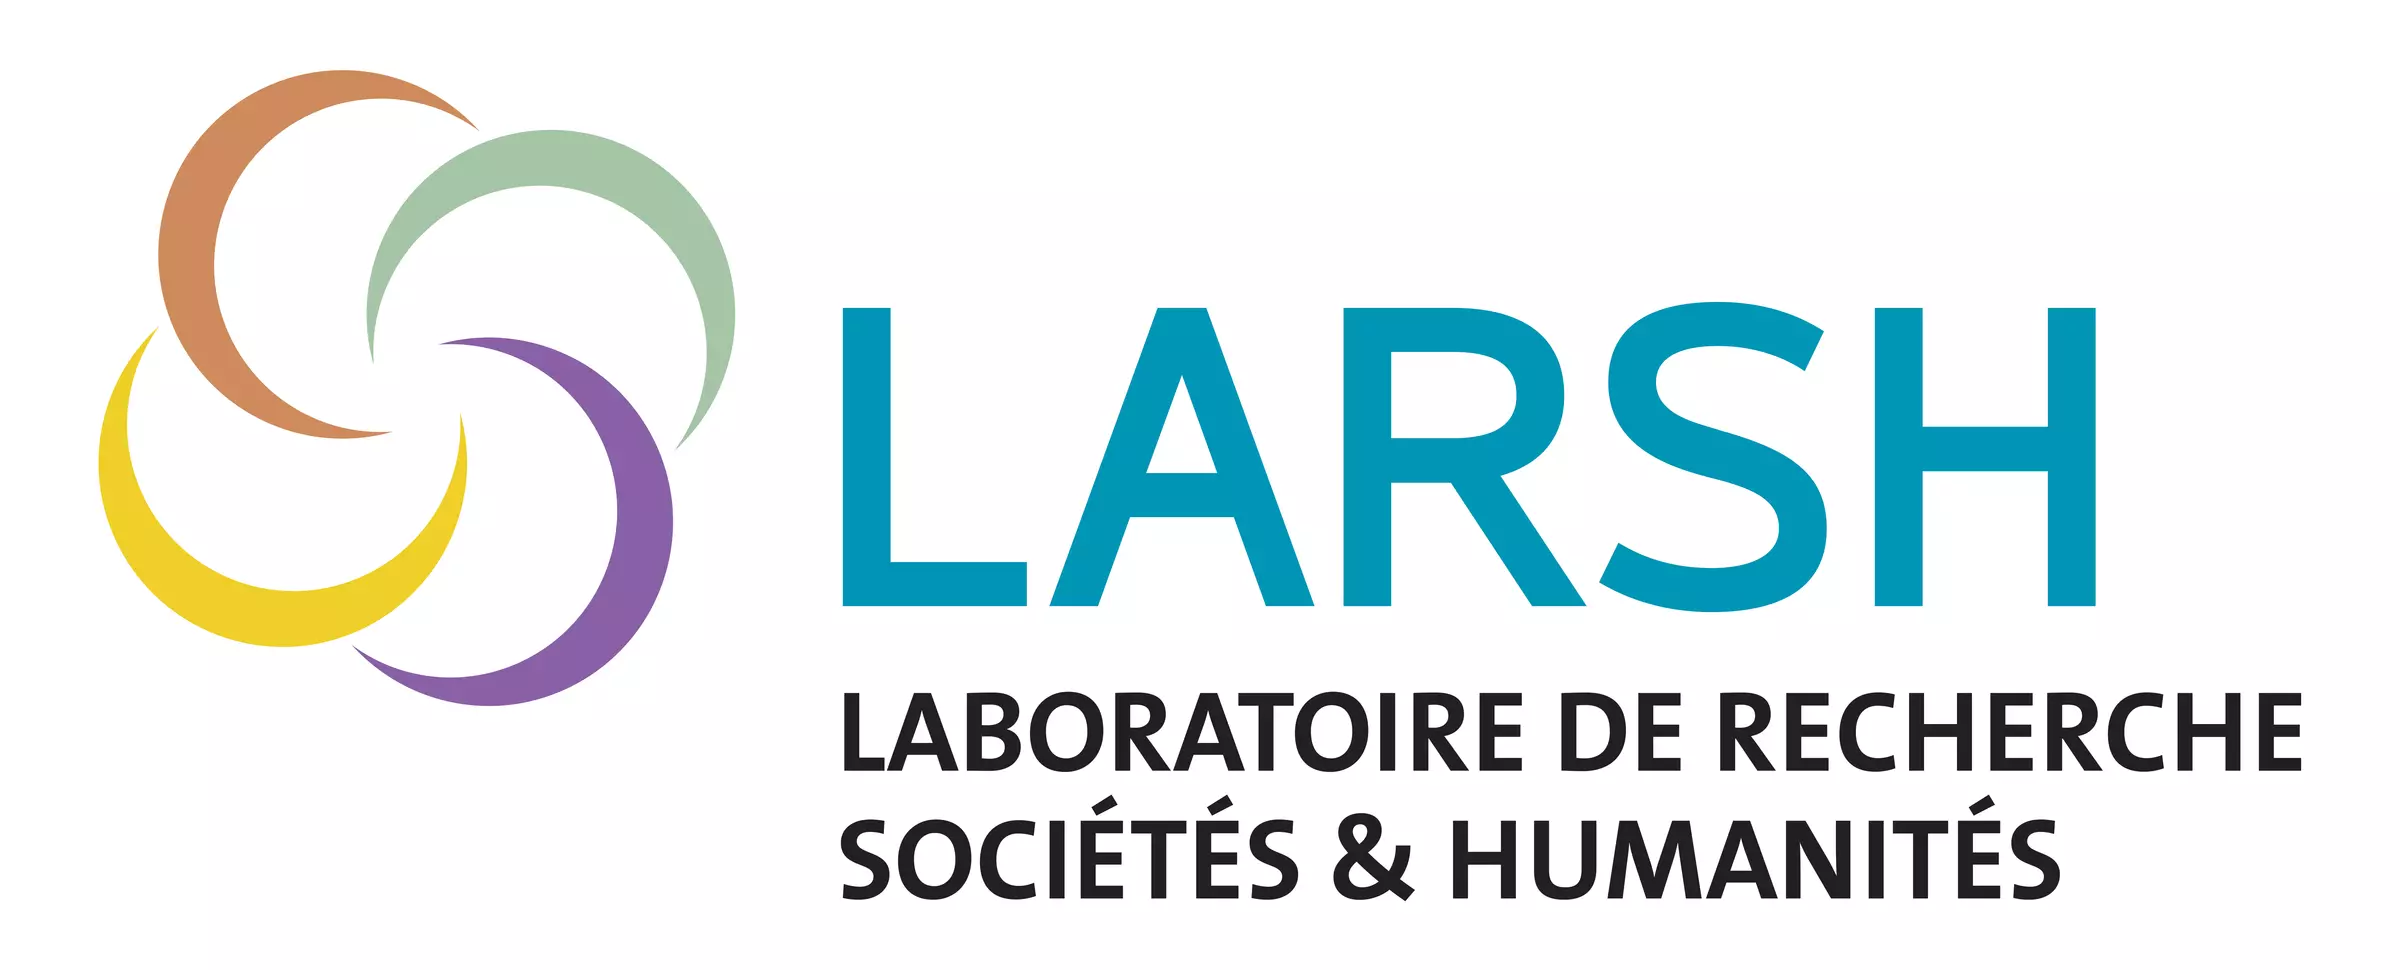 Societies & Humanities Research Laboratory